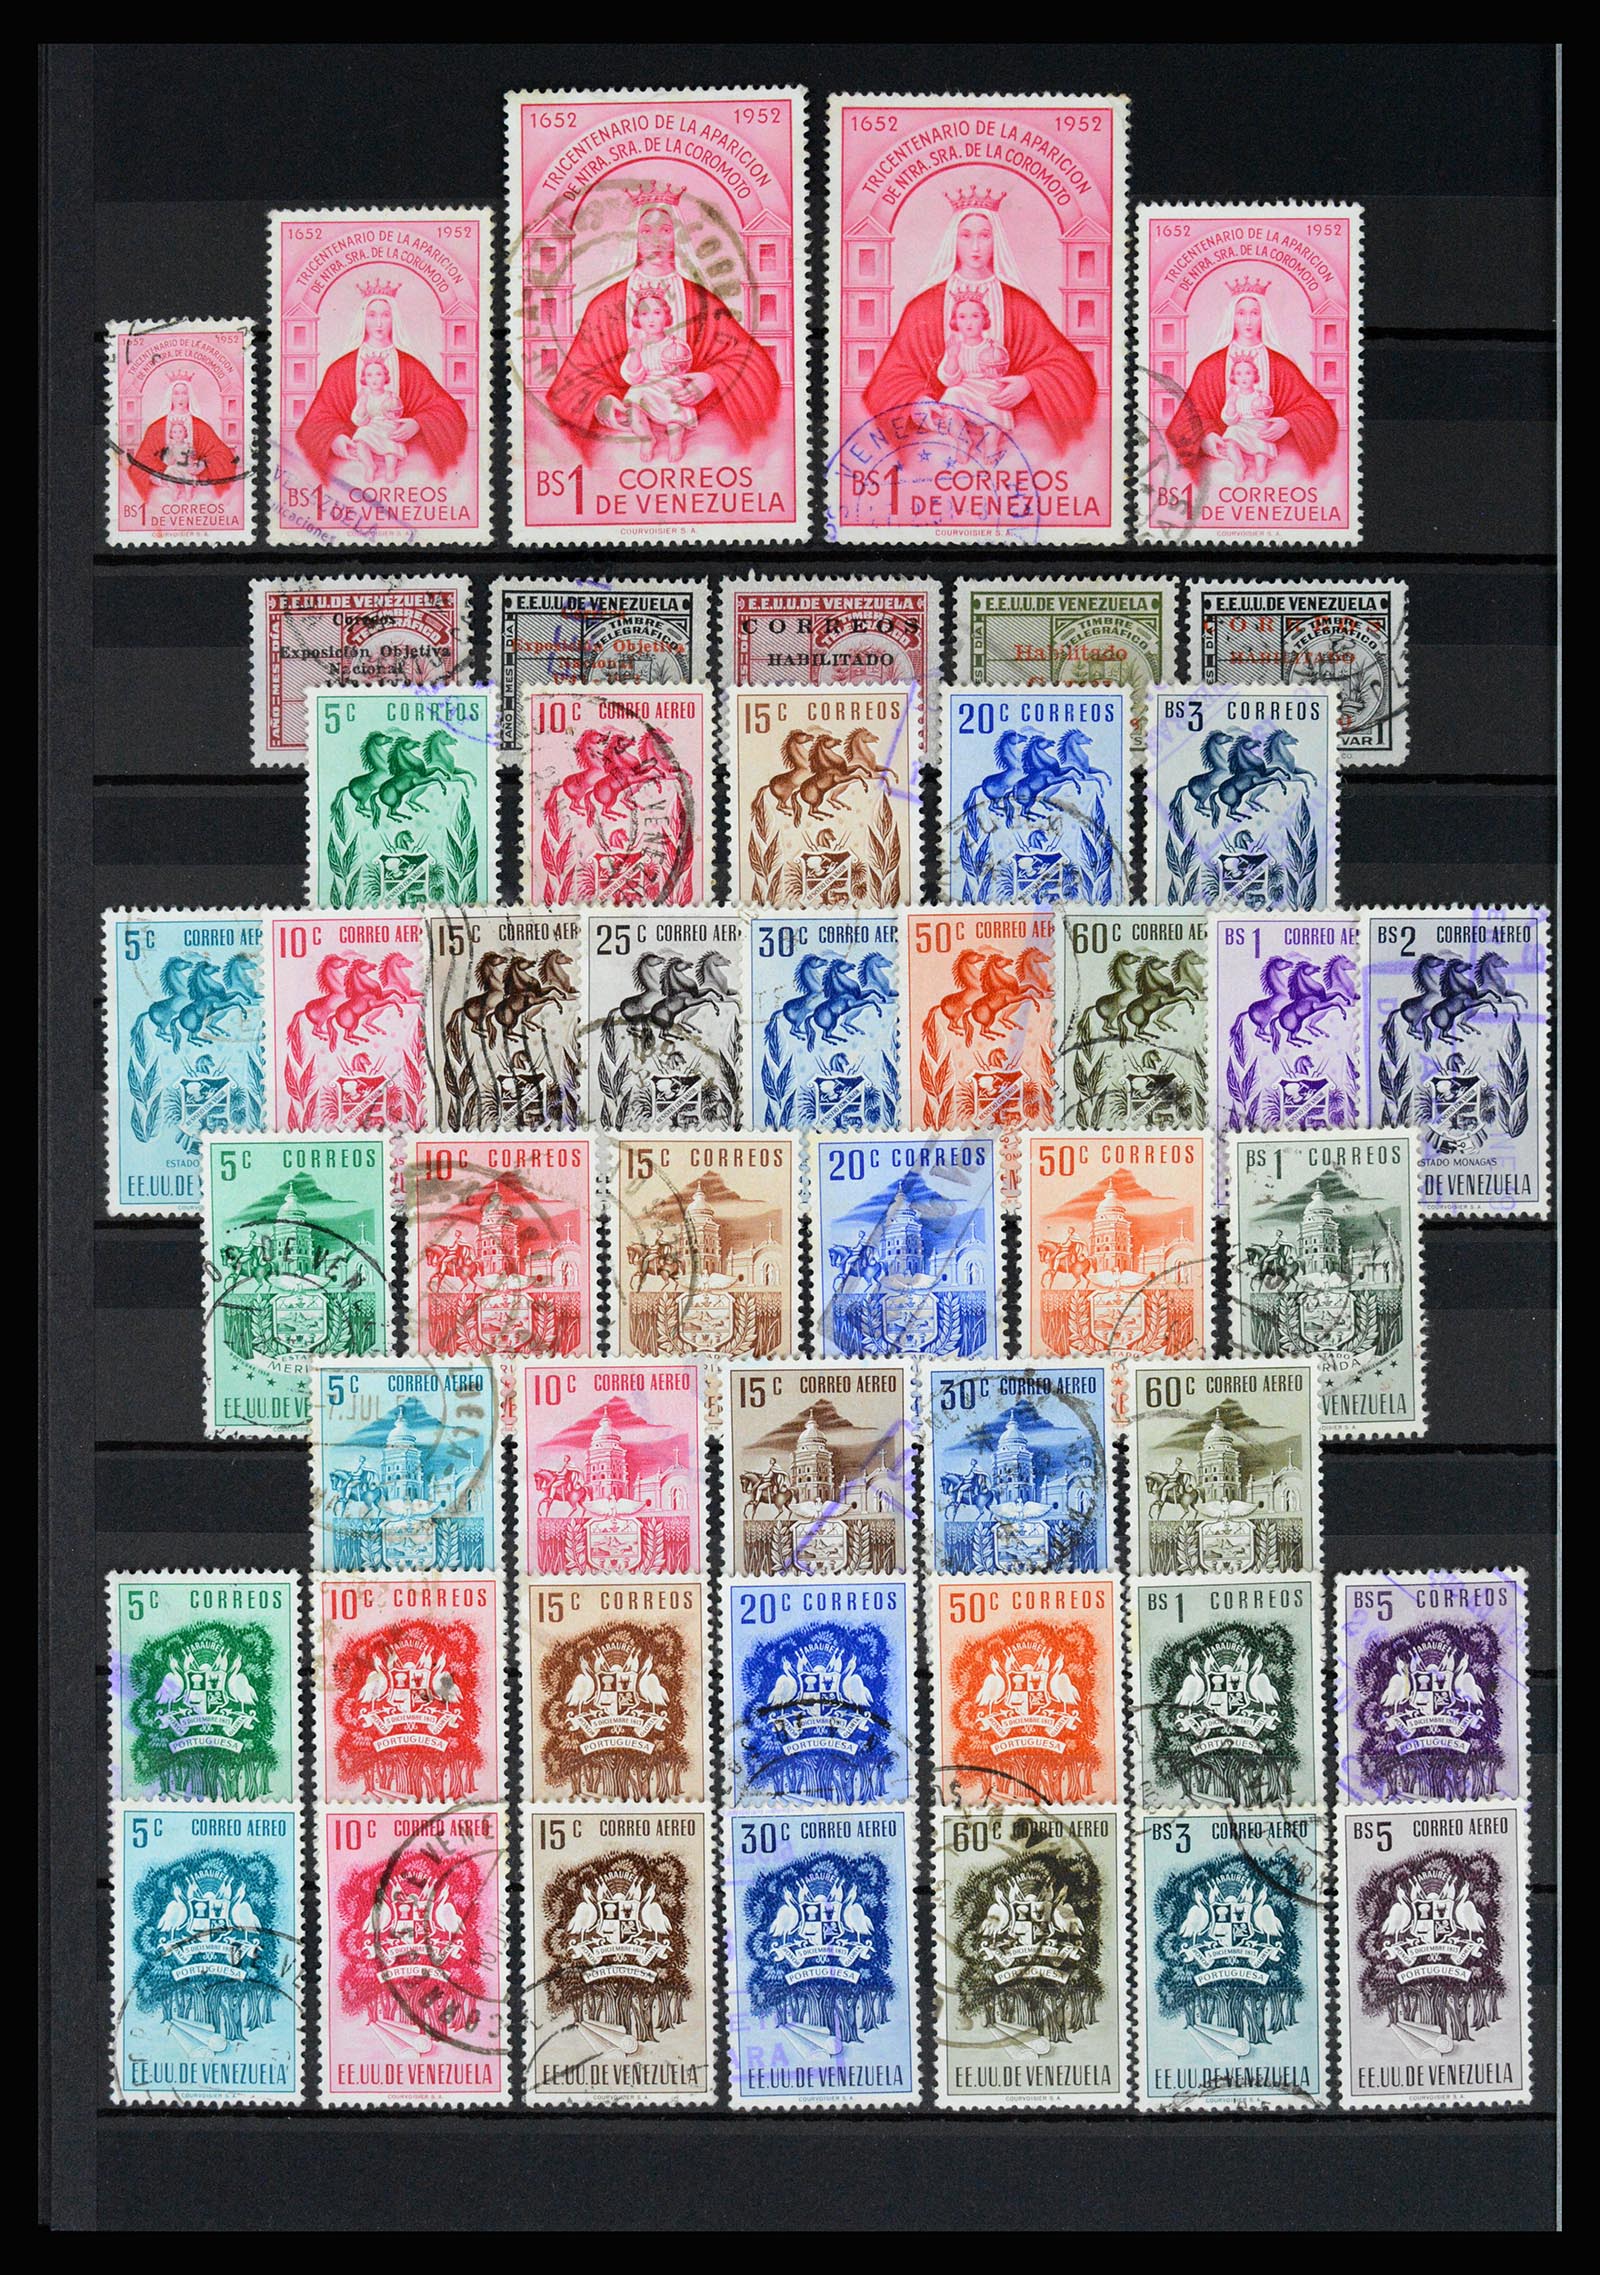 36987 019 - Stamp collection 36987 Venezuela 1860-1995.